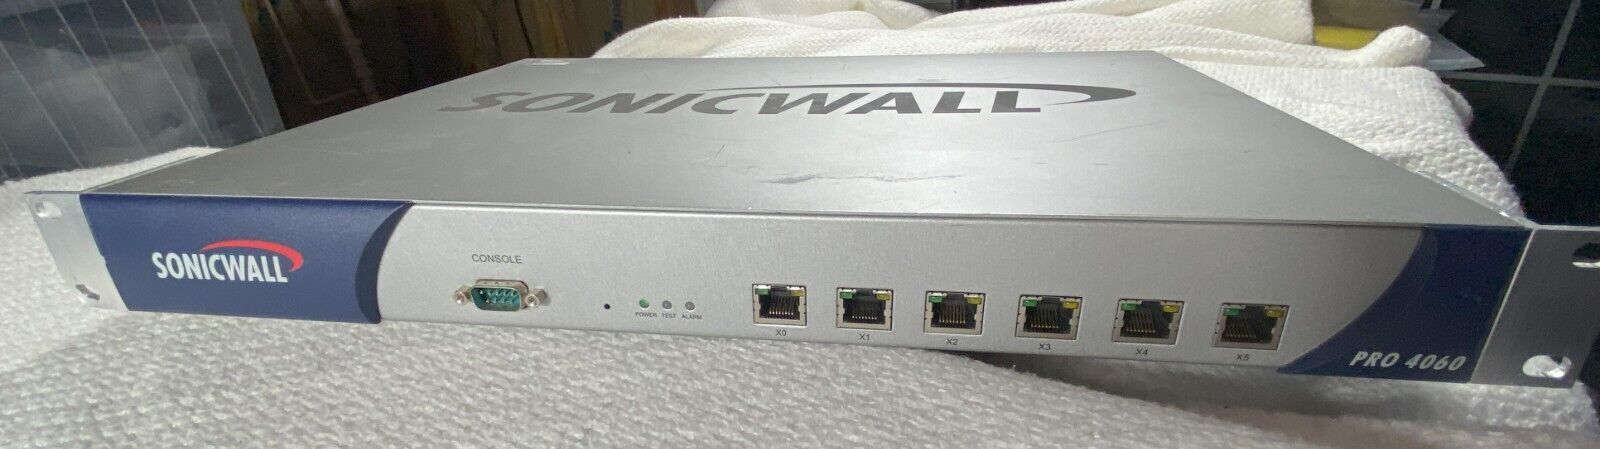 Sonicwall Pro 4060 Firewall and VPN Network Security Appliance w/ Rack Ears